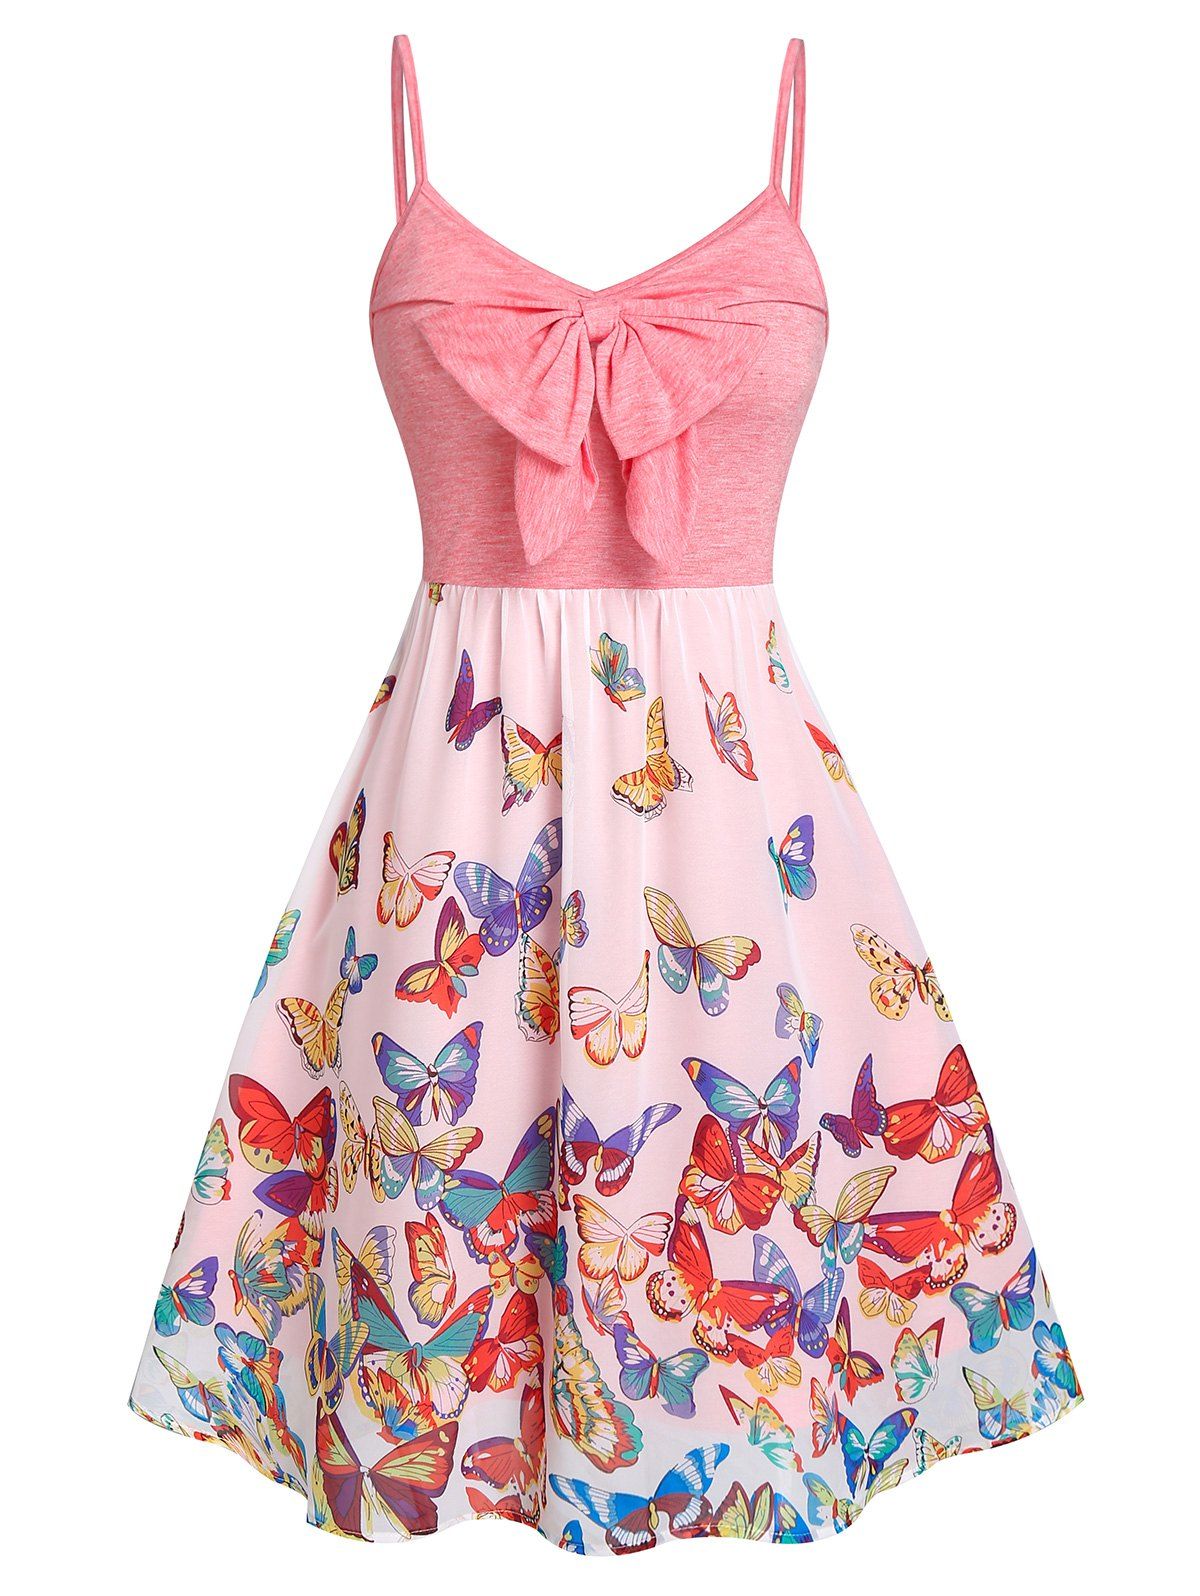 Butterfly Printed Bowknot Flare Cami Dress - LIGHT PINK XXXL